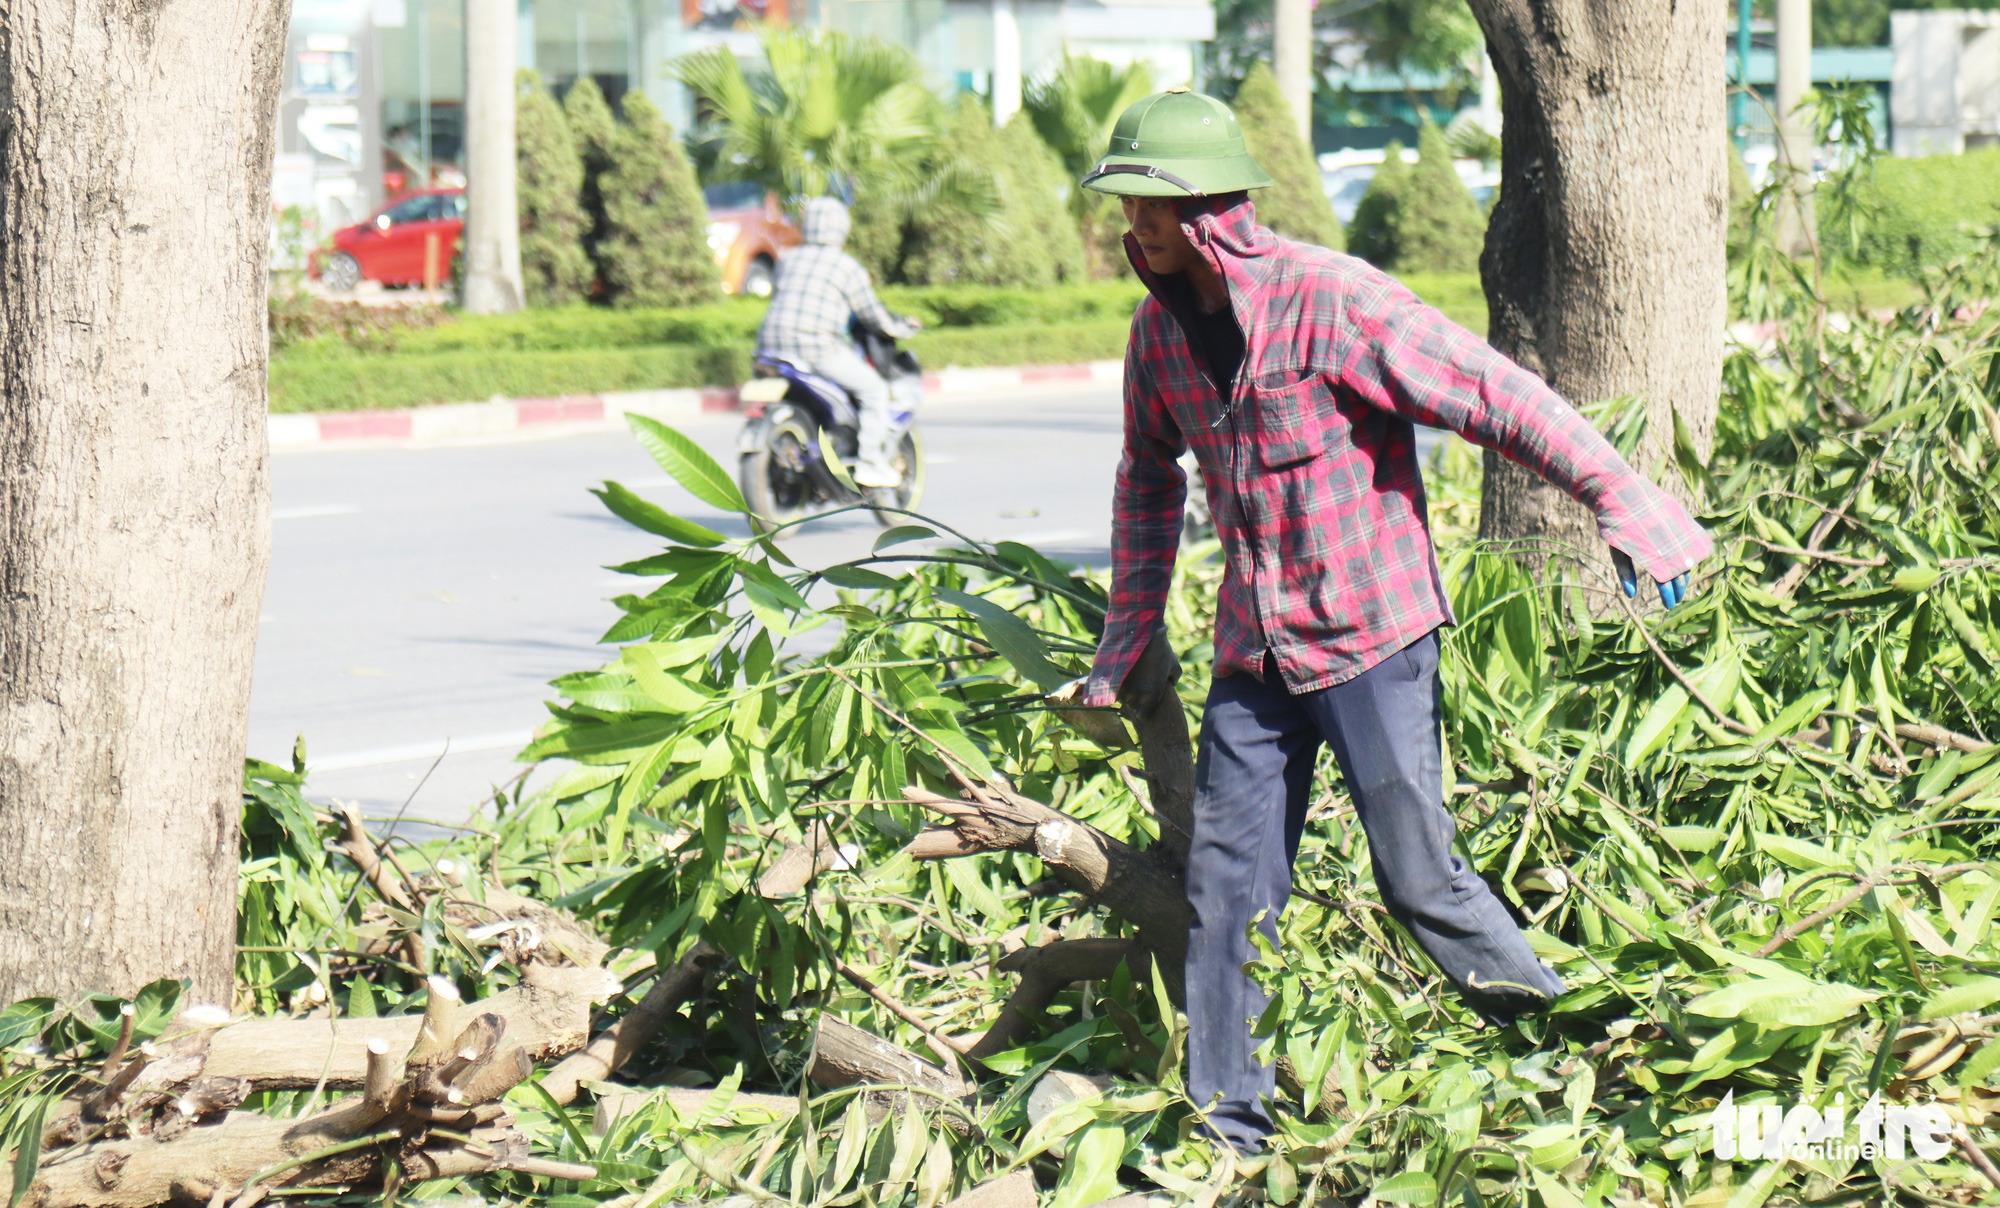 Vietnamese city trims trees en masse as intense heatwaves bake streets